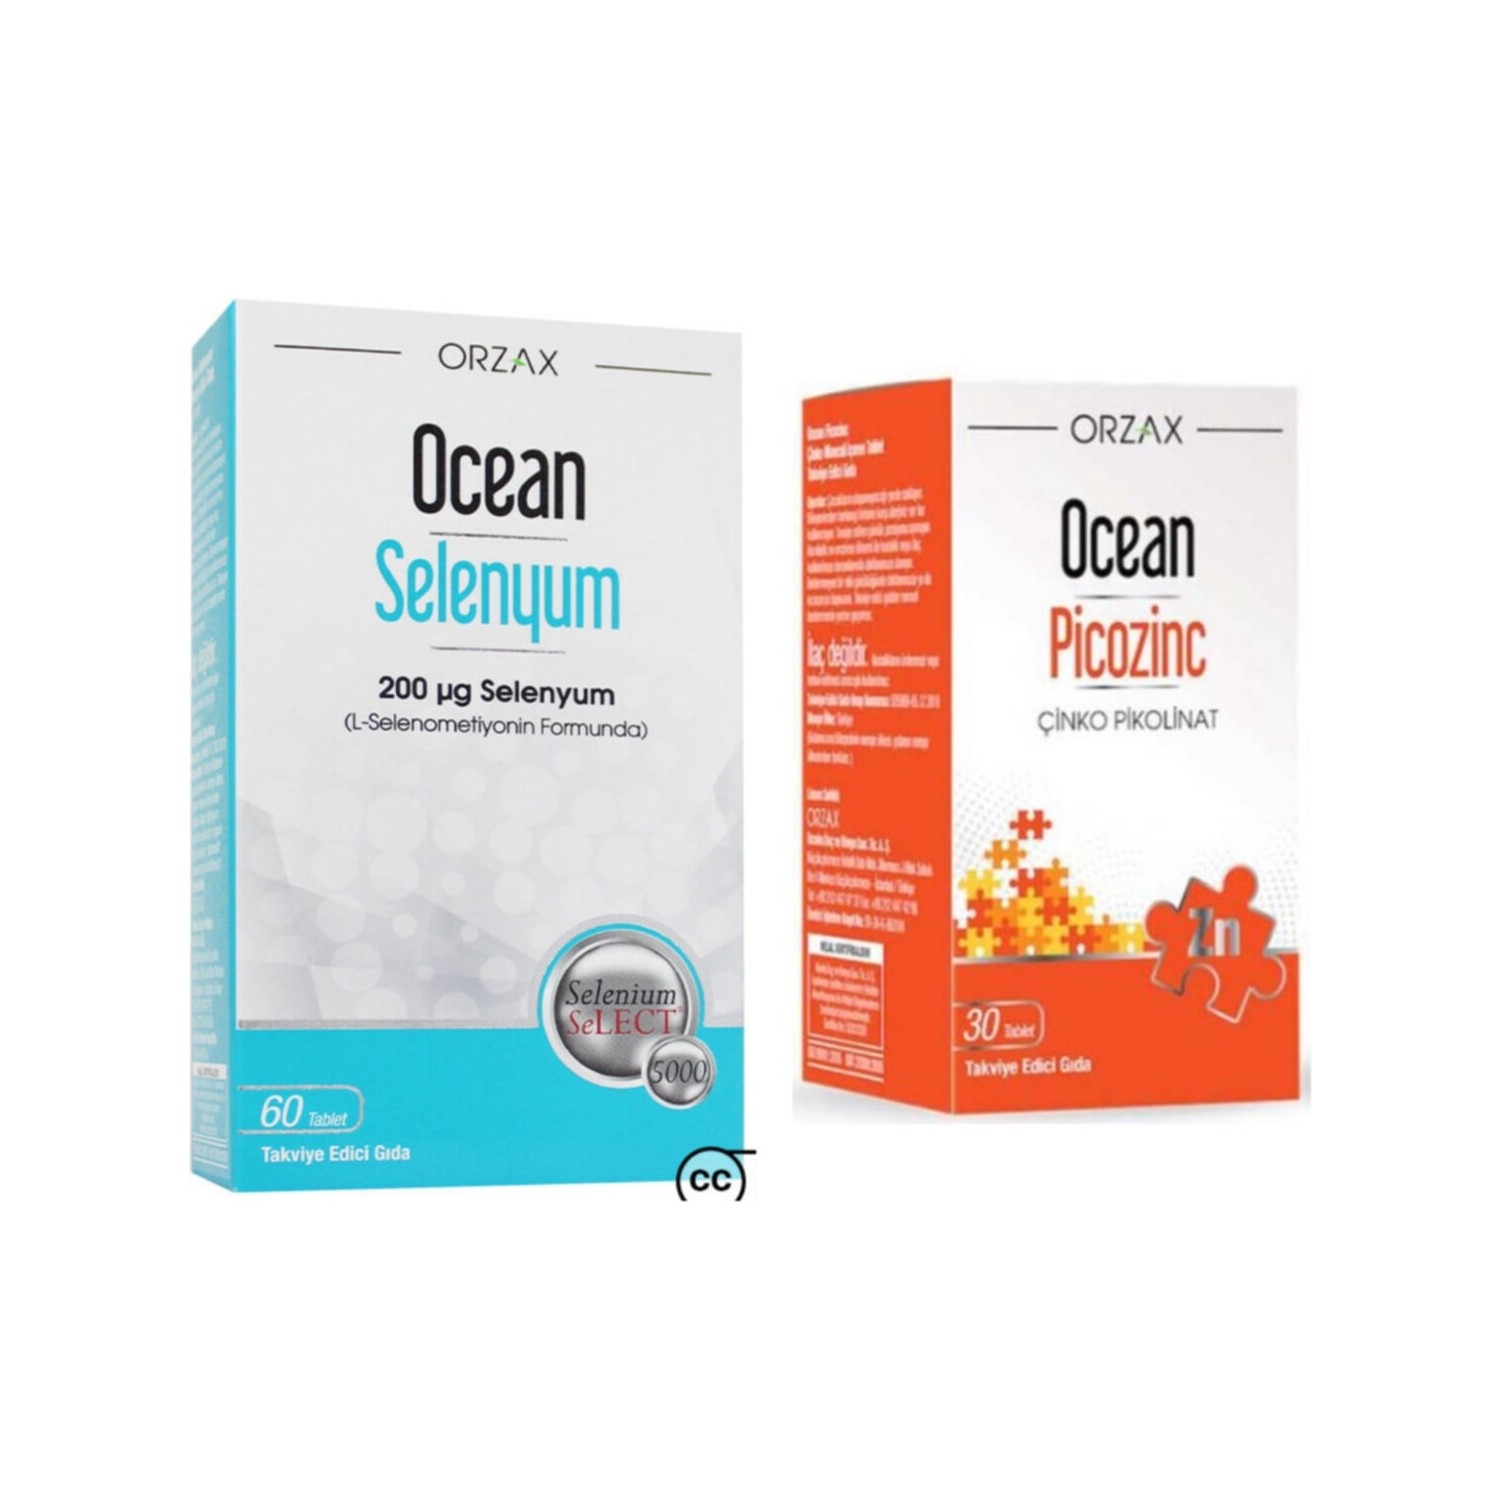 Селен Ocean 200 мкг, 60 таблеток + Пищевая добавка Ocean Picozinc Cinko Picolinate, 30 капсул пищевая добавка ocean picozinc cinko picolinate 30 таблеток